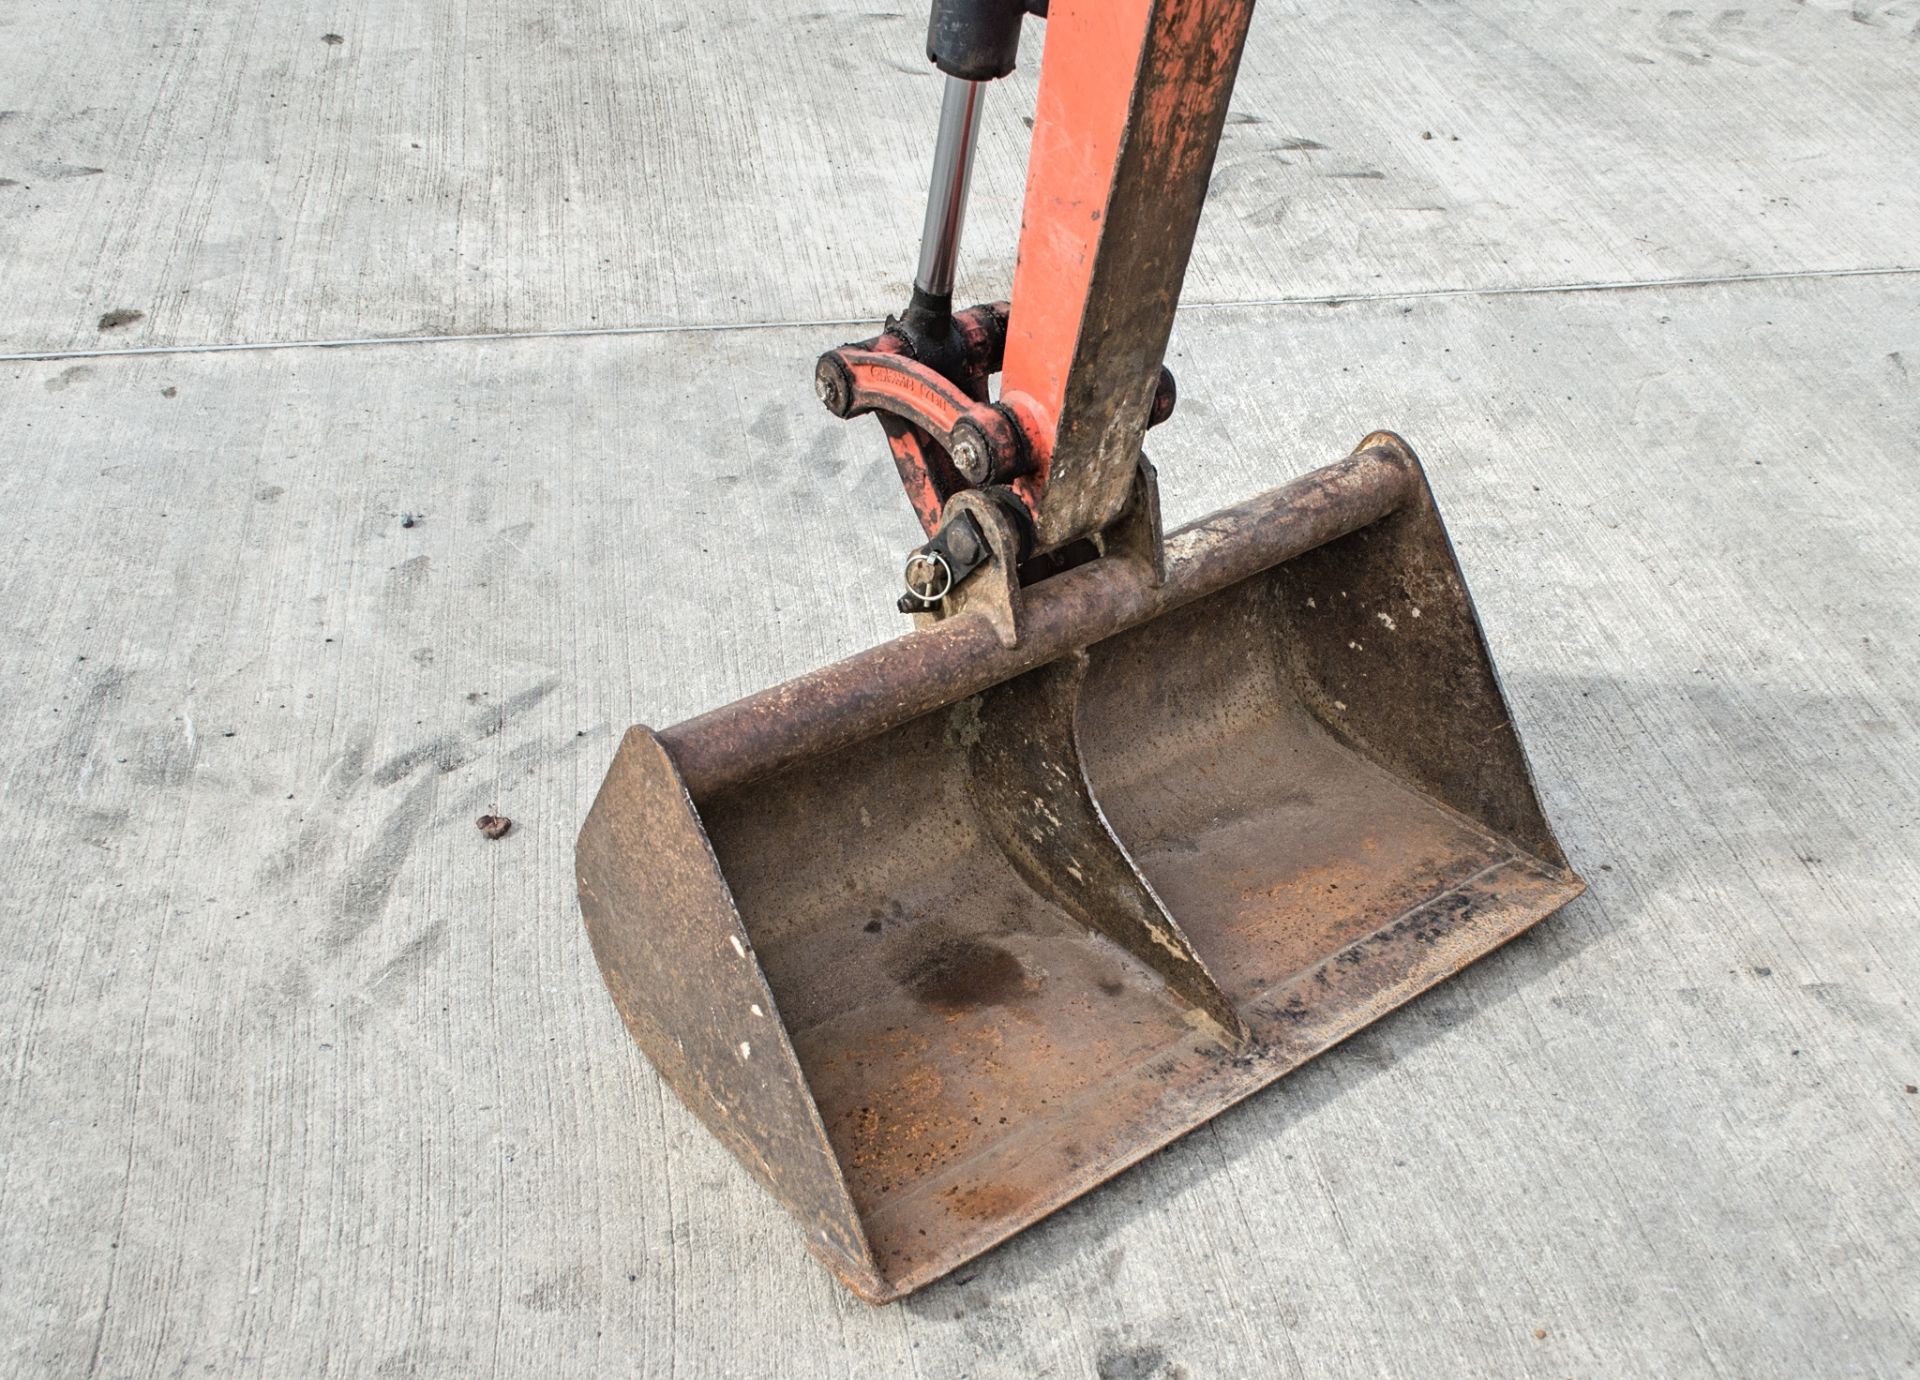 Kubota KX015-4 1.5 tonne rubber tracked mini excavator Year: 2014 S/N: 57850 Recorded Hours: 2054 - Image 12 of 22